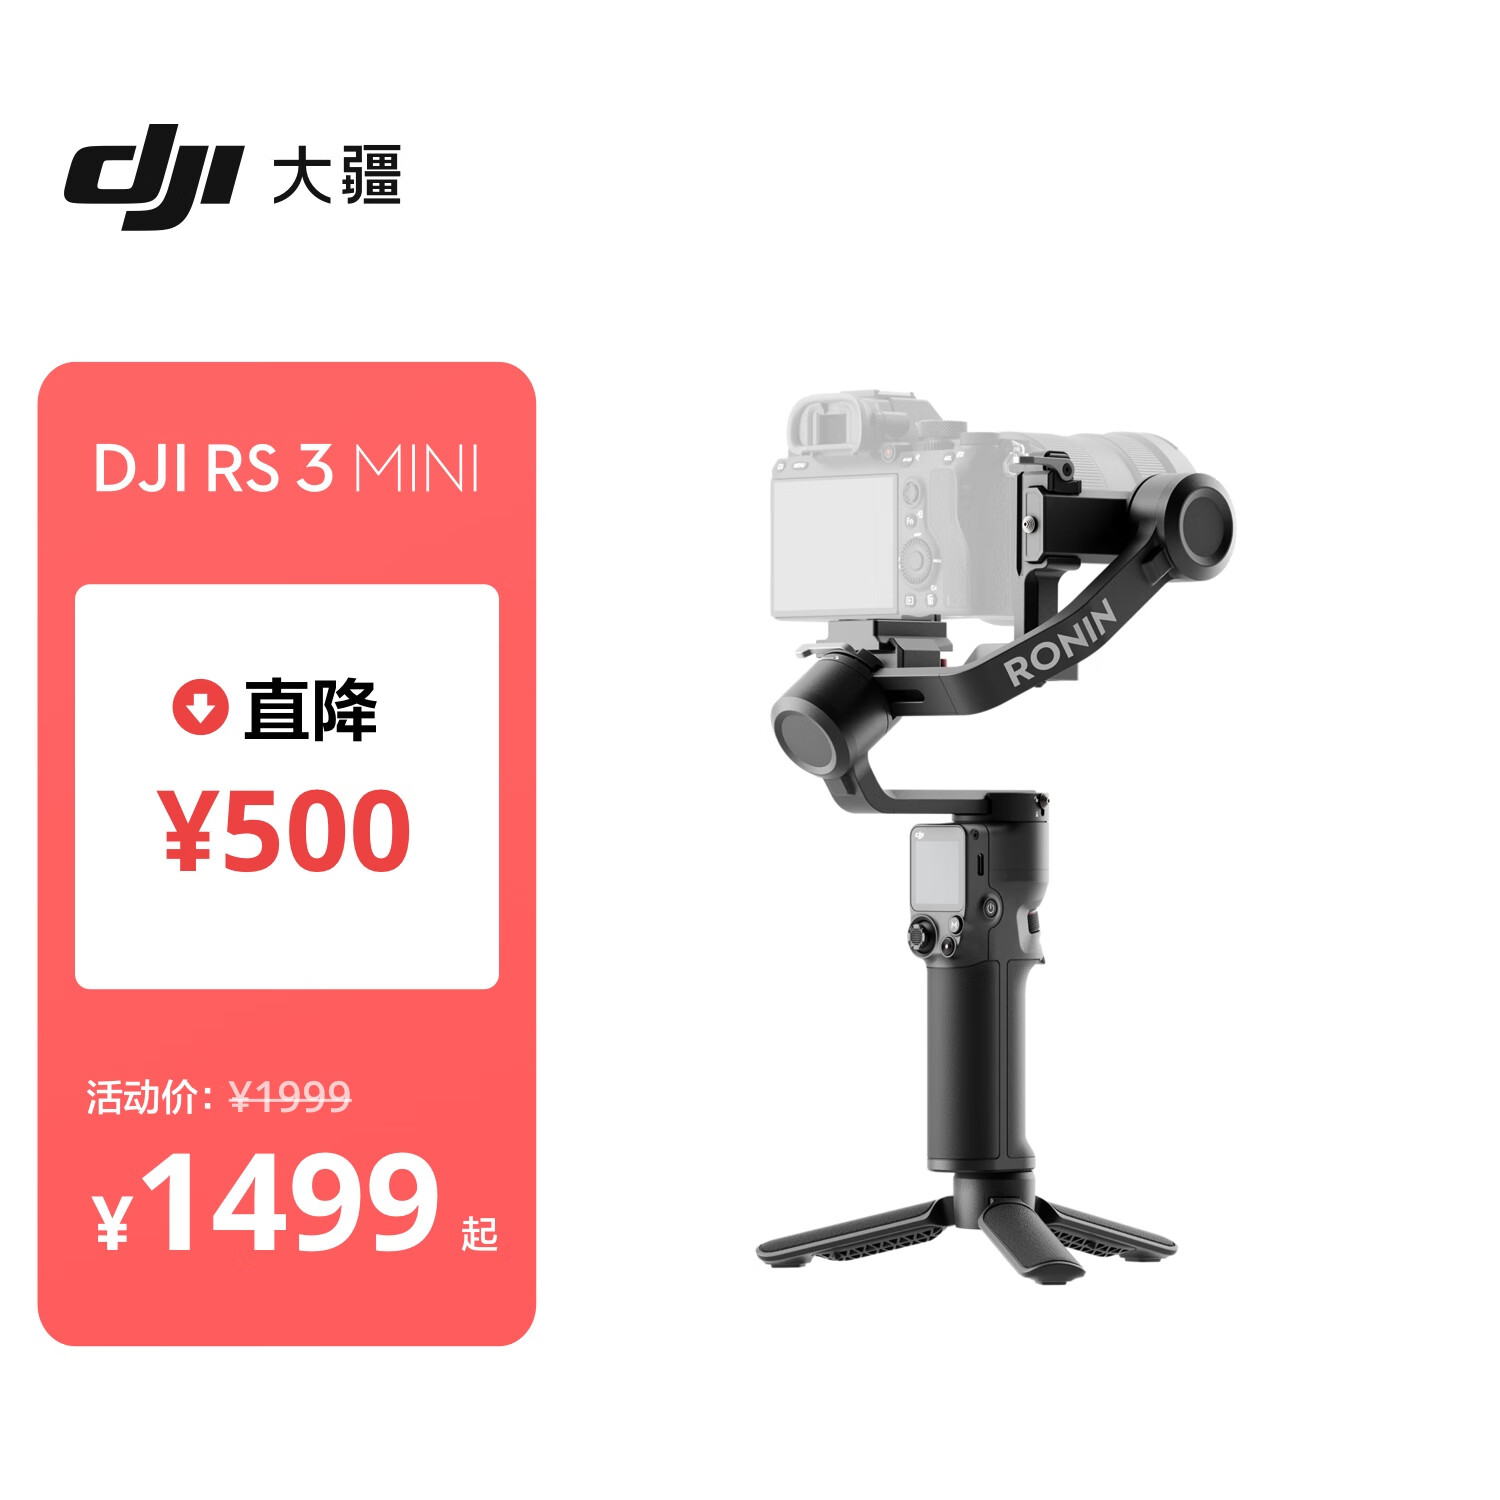 DJI 大疆 RS 3 Mini 云台稳定器 标准版 1499元